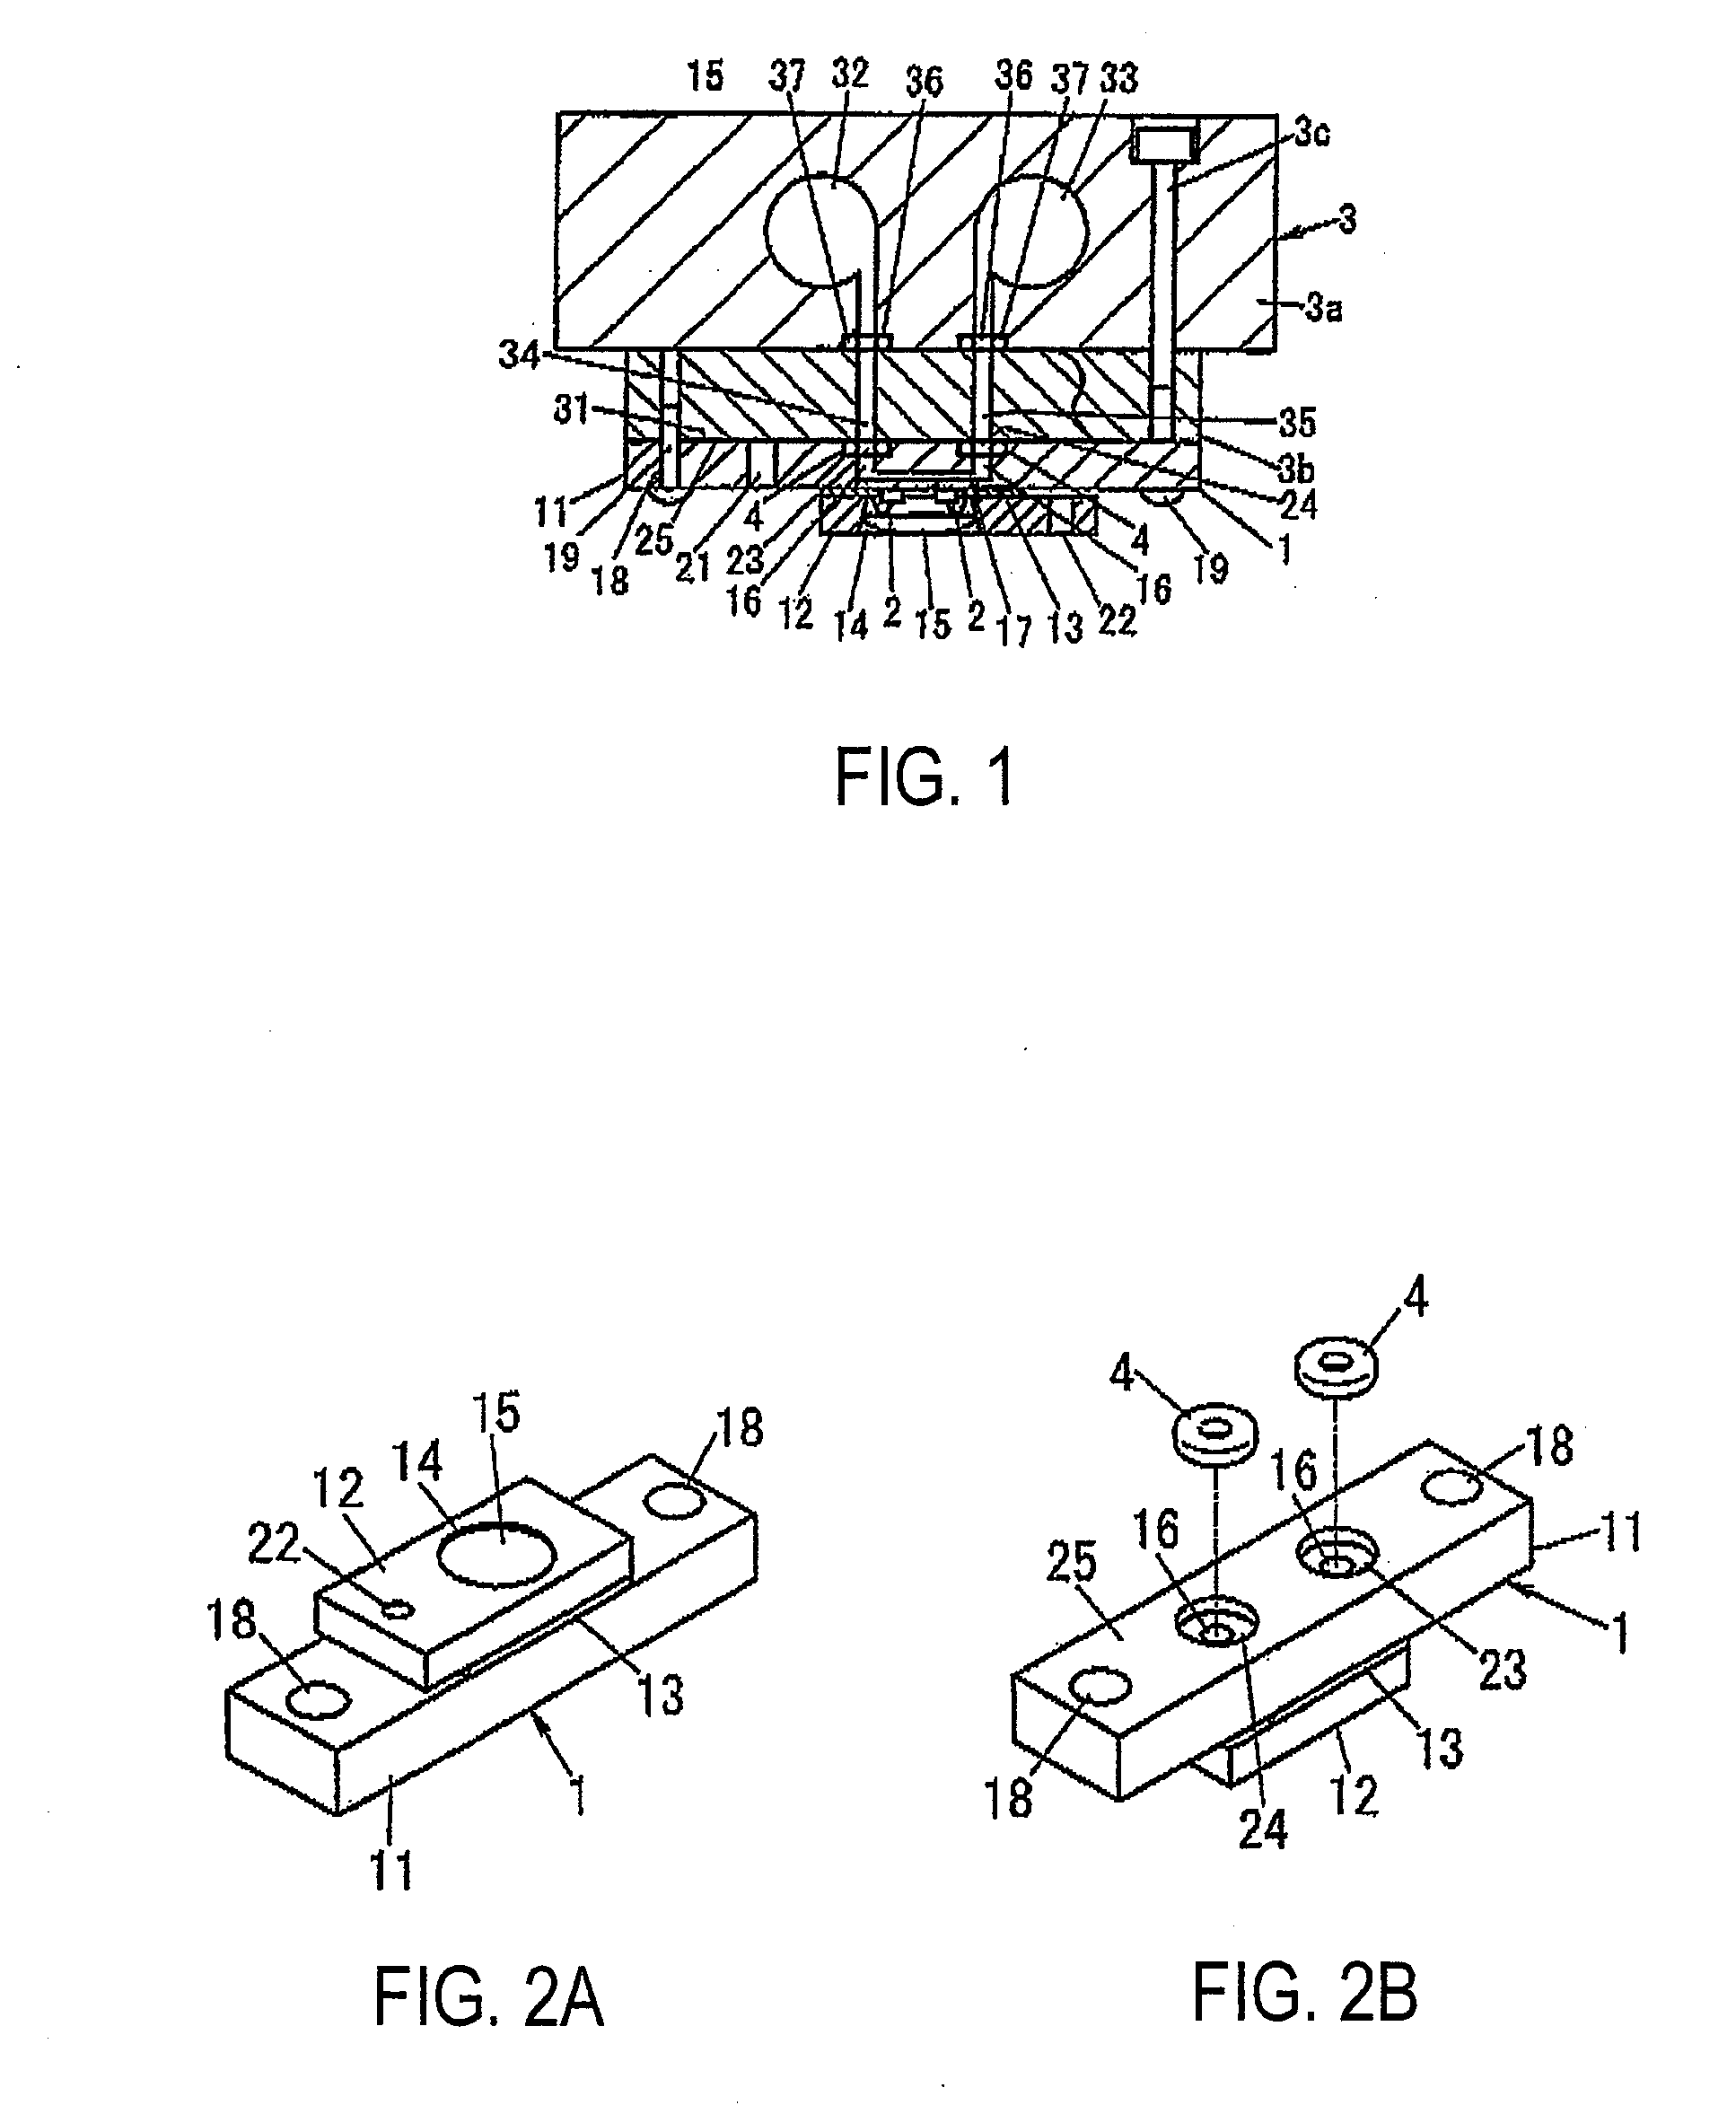 Heatsink and semiconductor device with heatsink